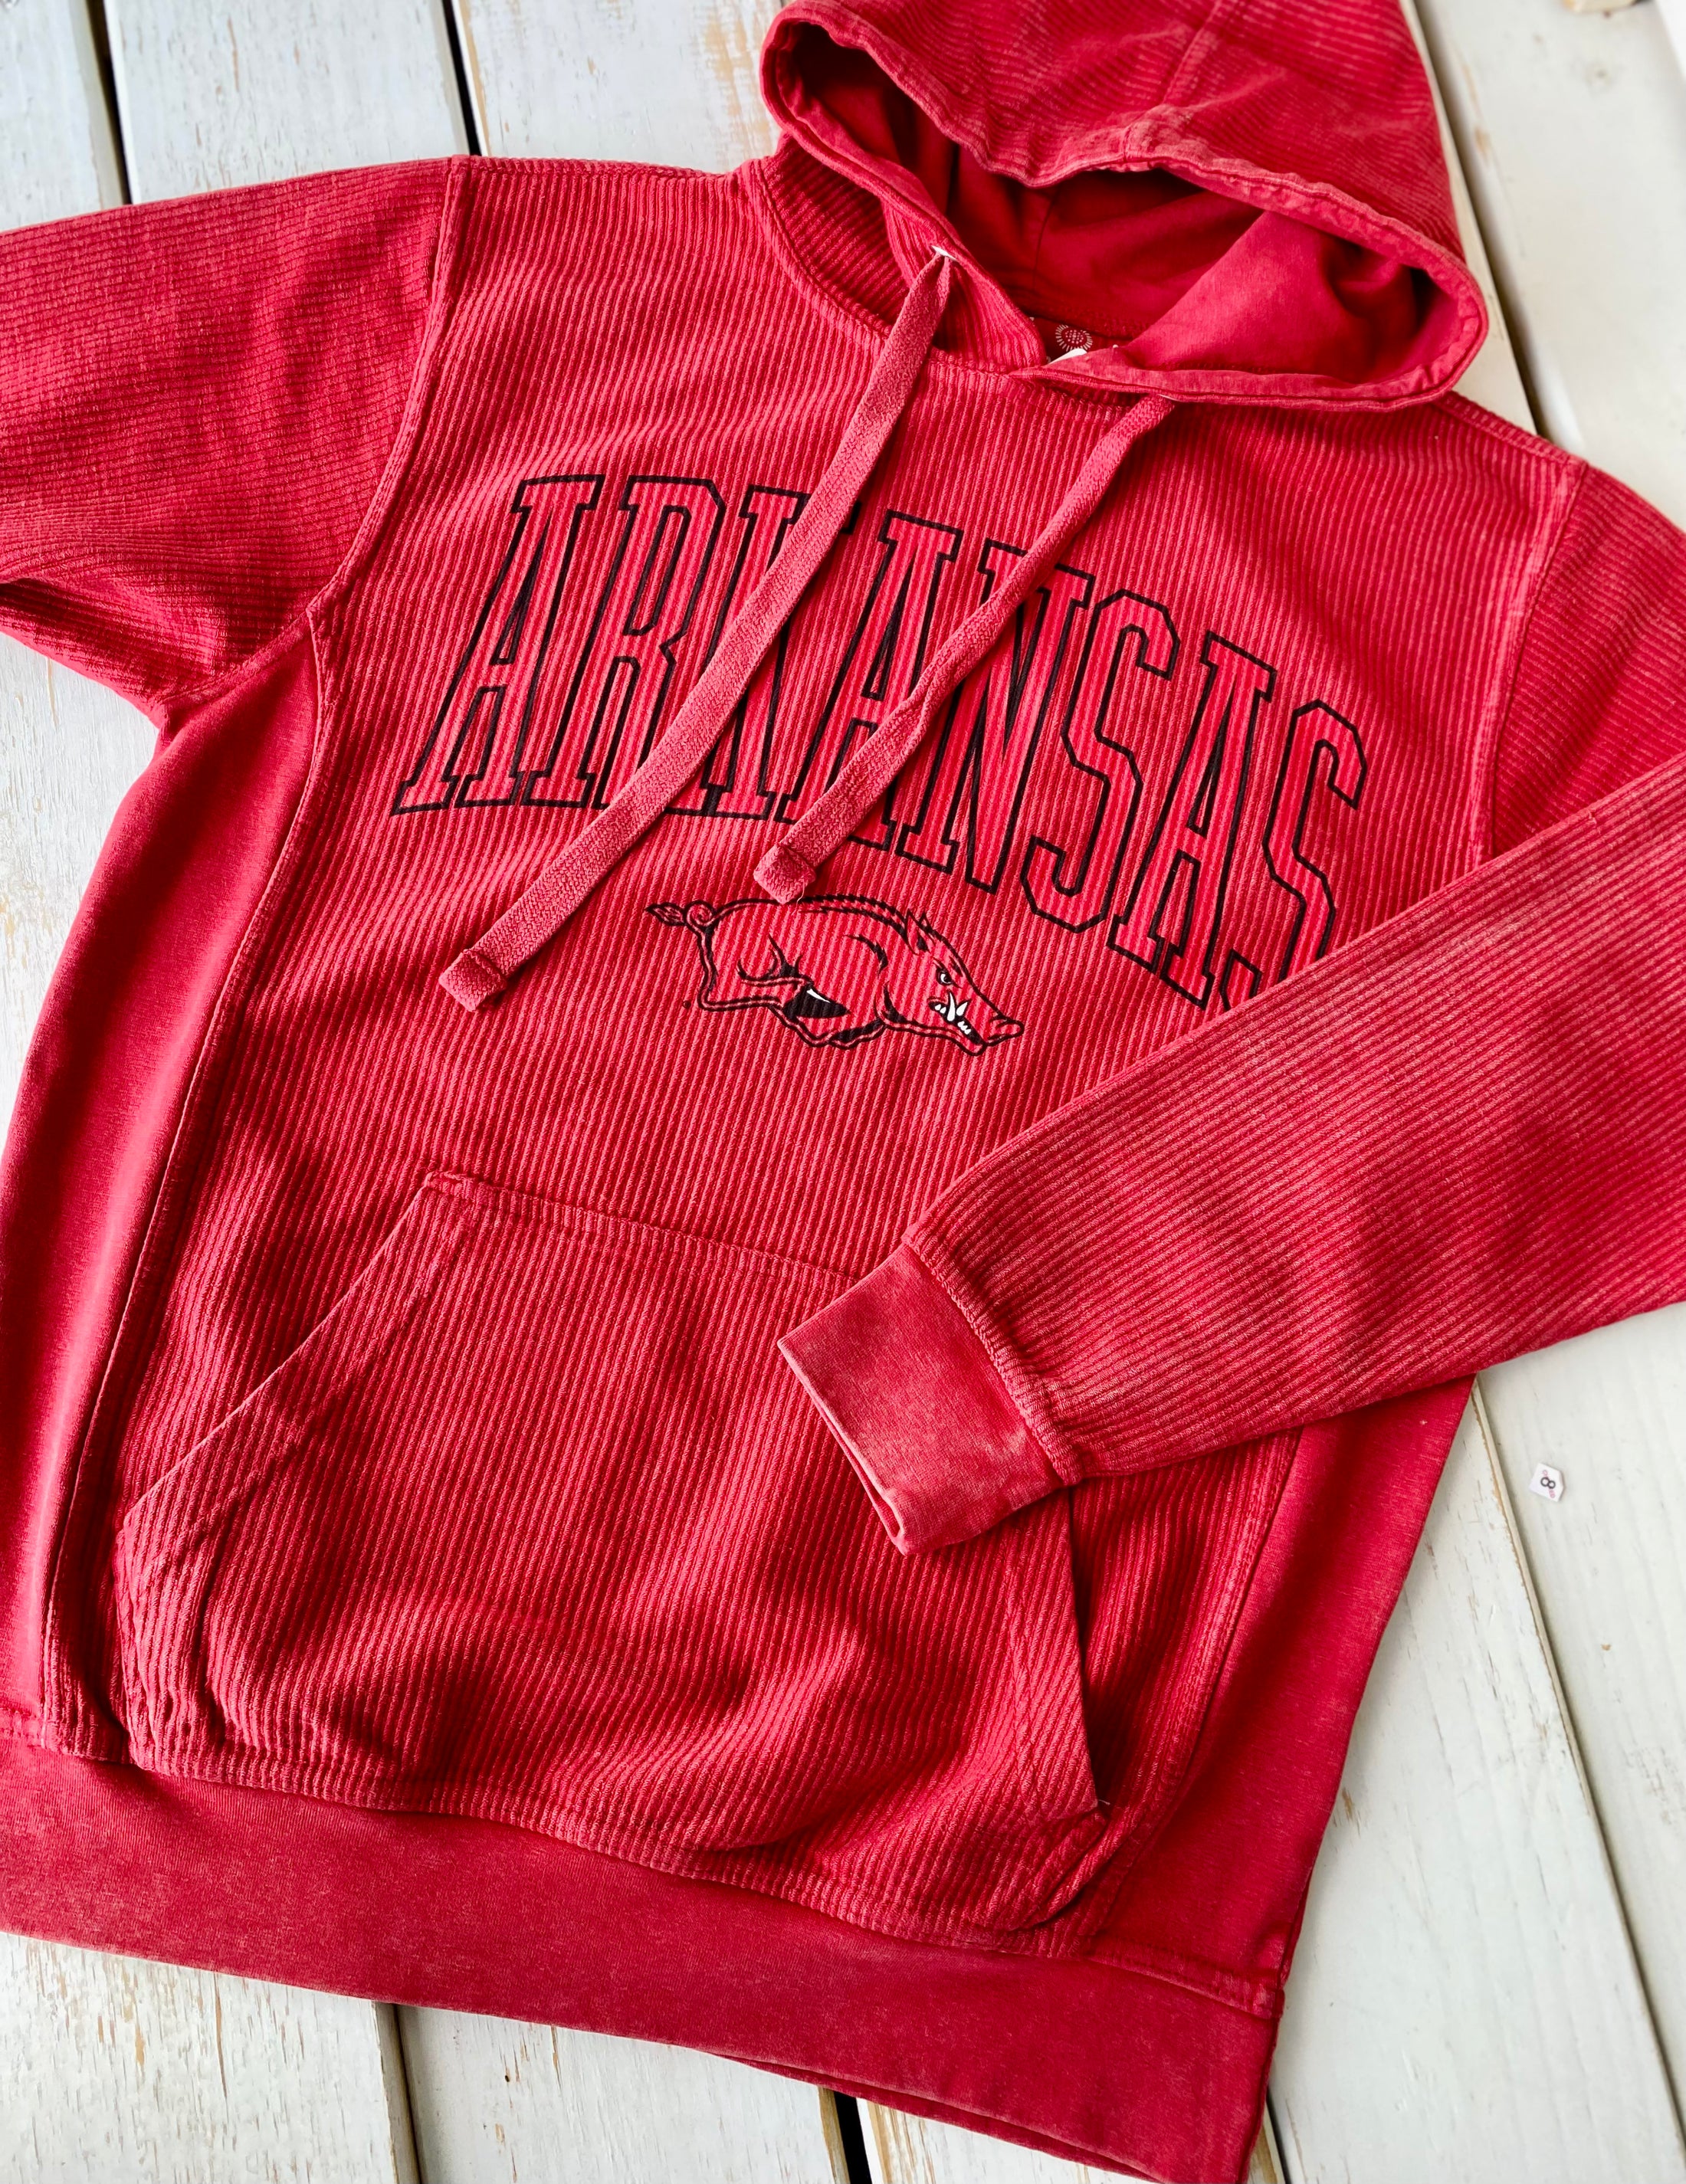 Arkansas-Razorback-Hoodies-corded-sweatshirt-razorback-stores.HEIC